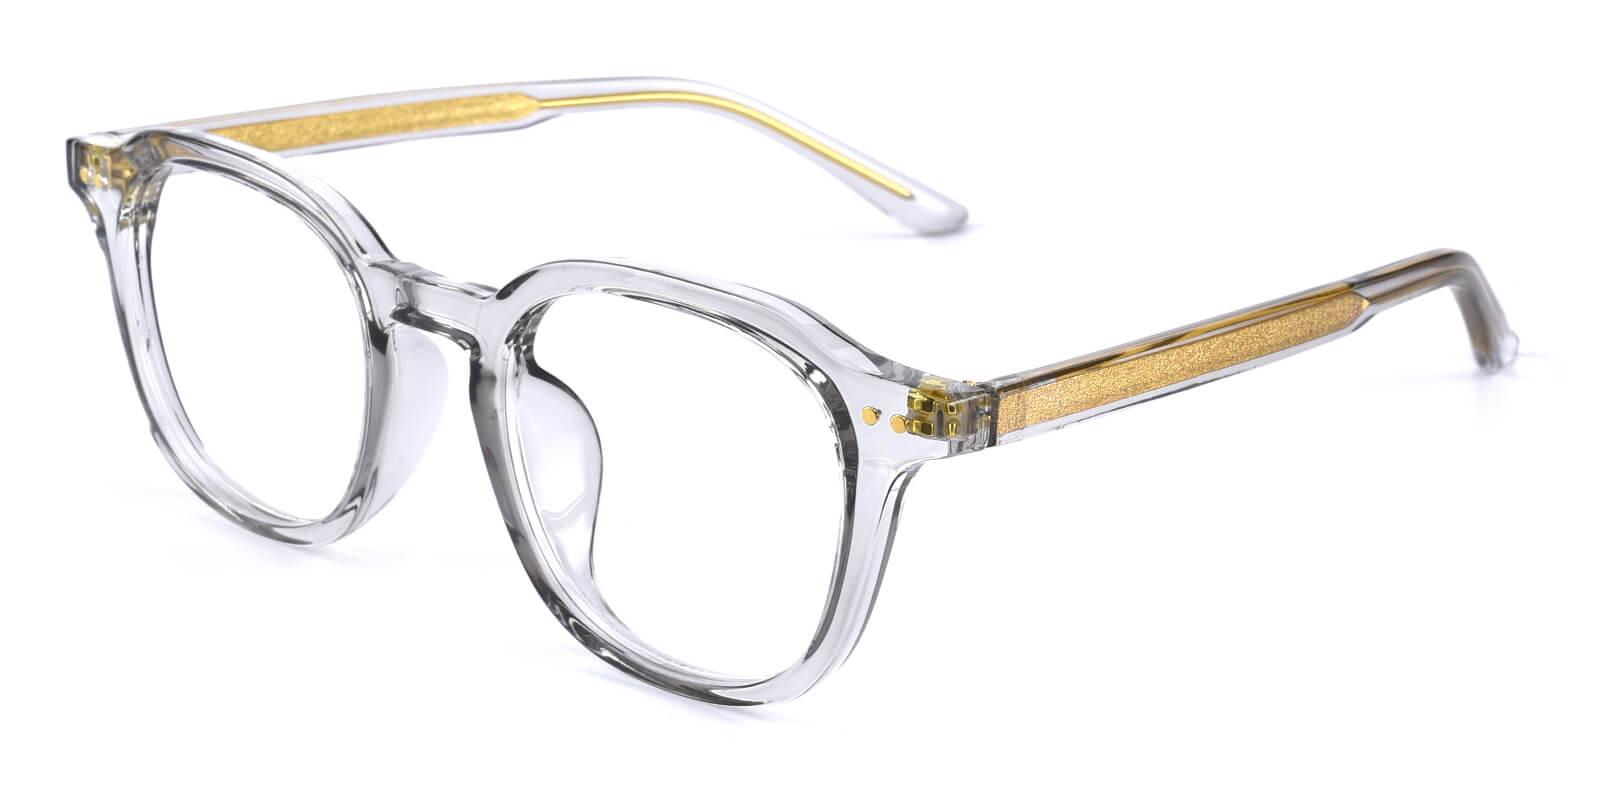 Dapper-Gray-Geometric / Square-Acetate-Eyeglasses-detail